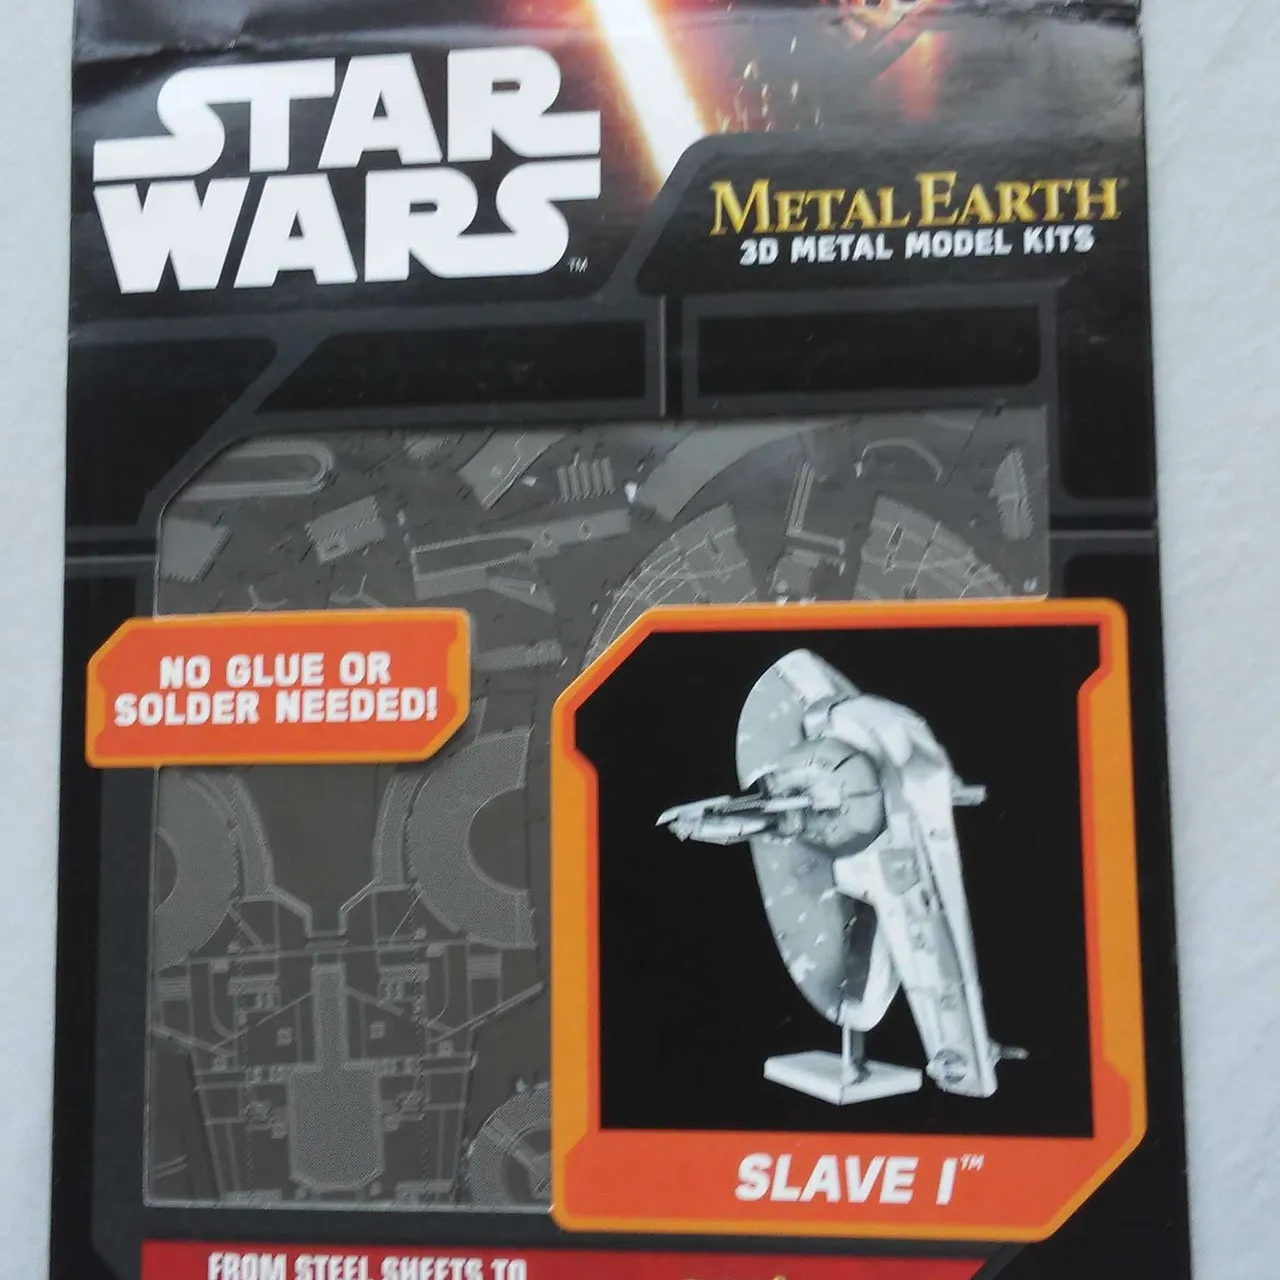 Star Wars model kit photo 1